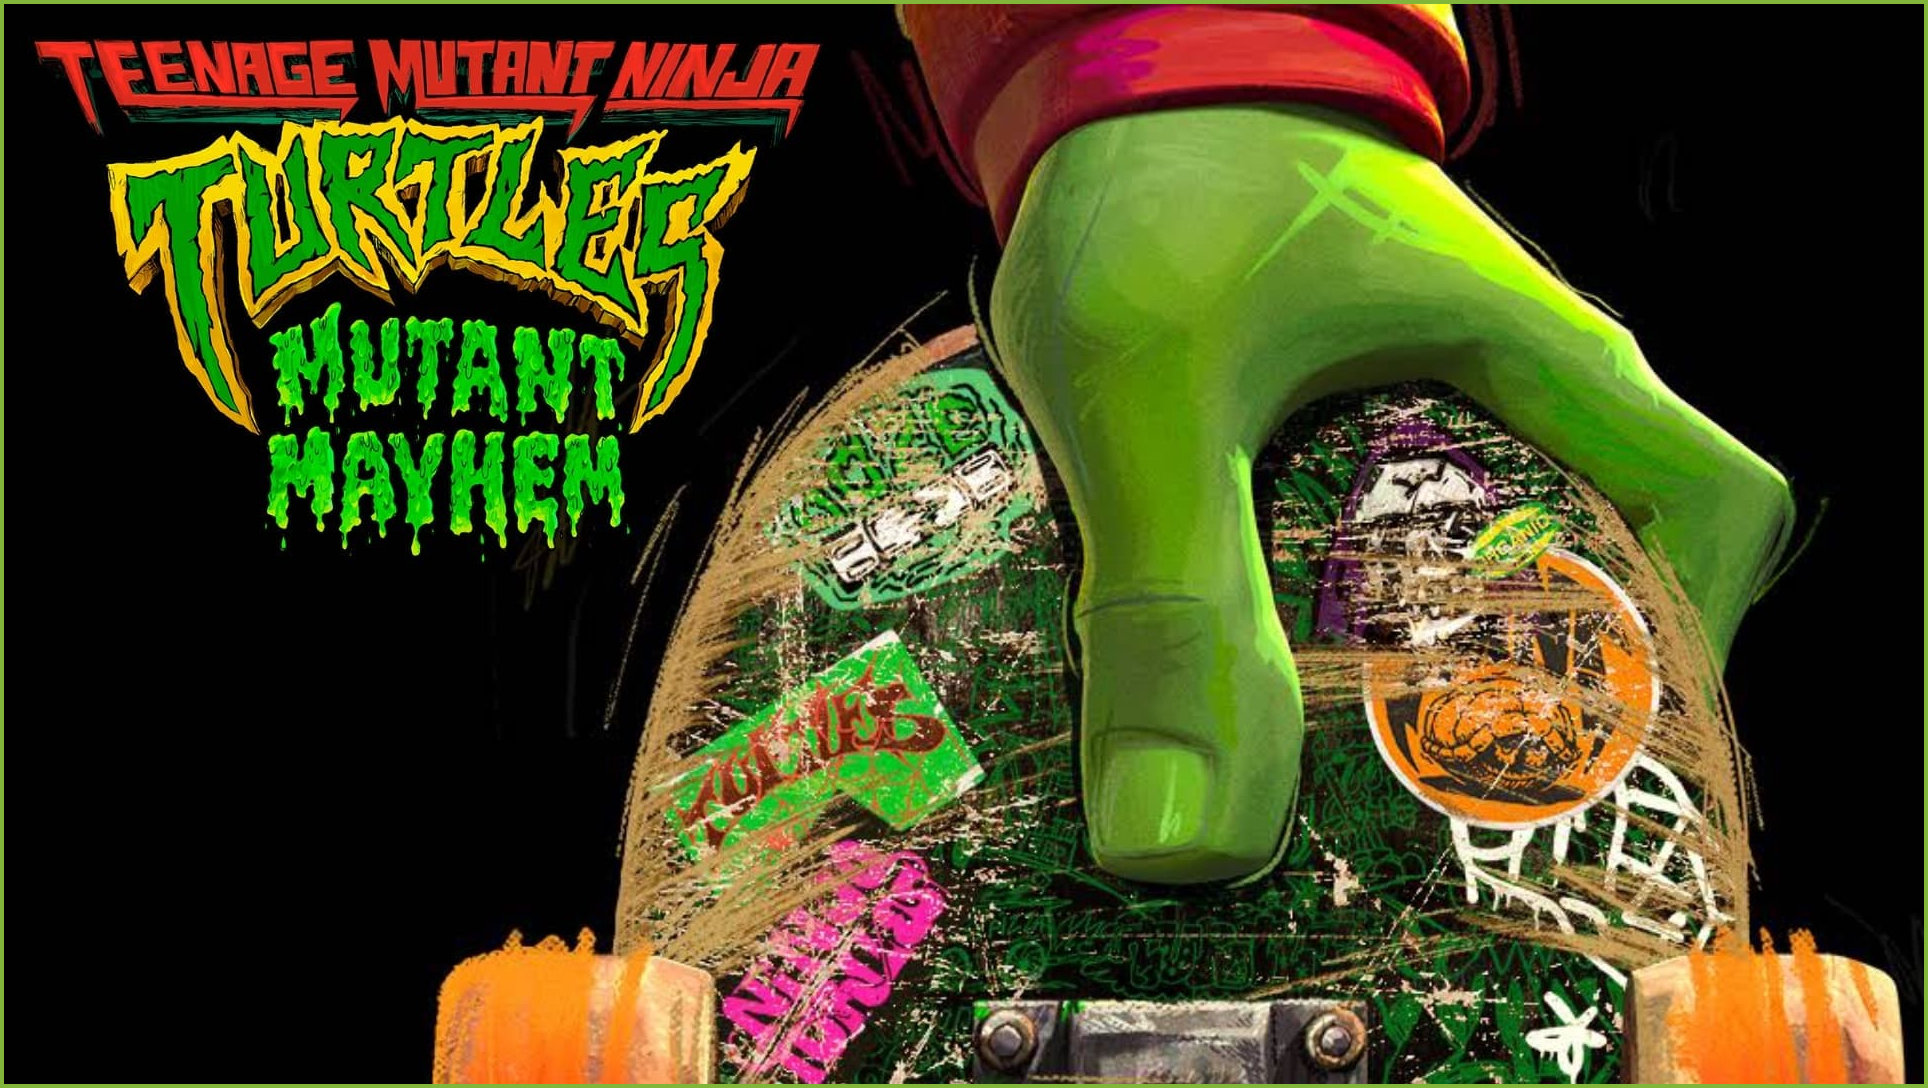 Teenage Mutant Ninja Turtles Mutant Mayhem Queen Style